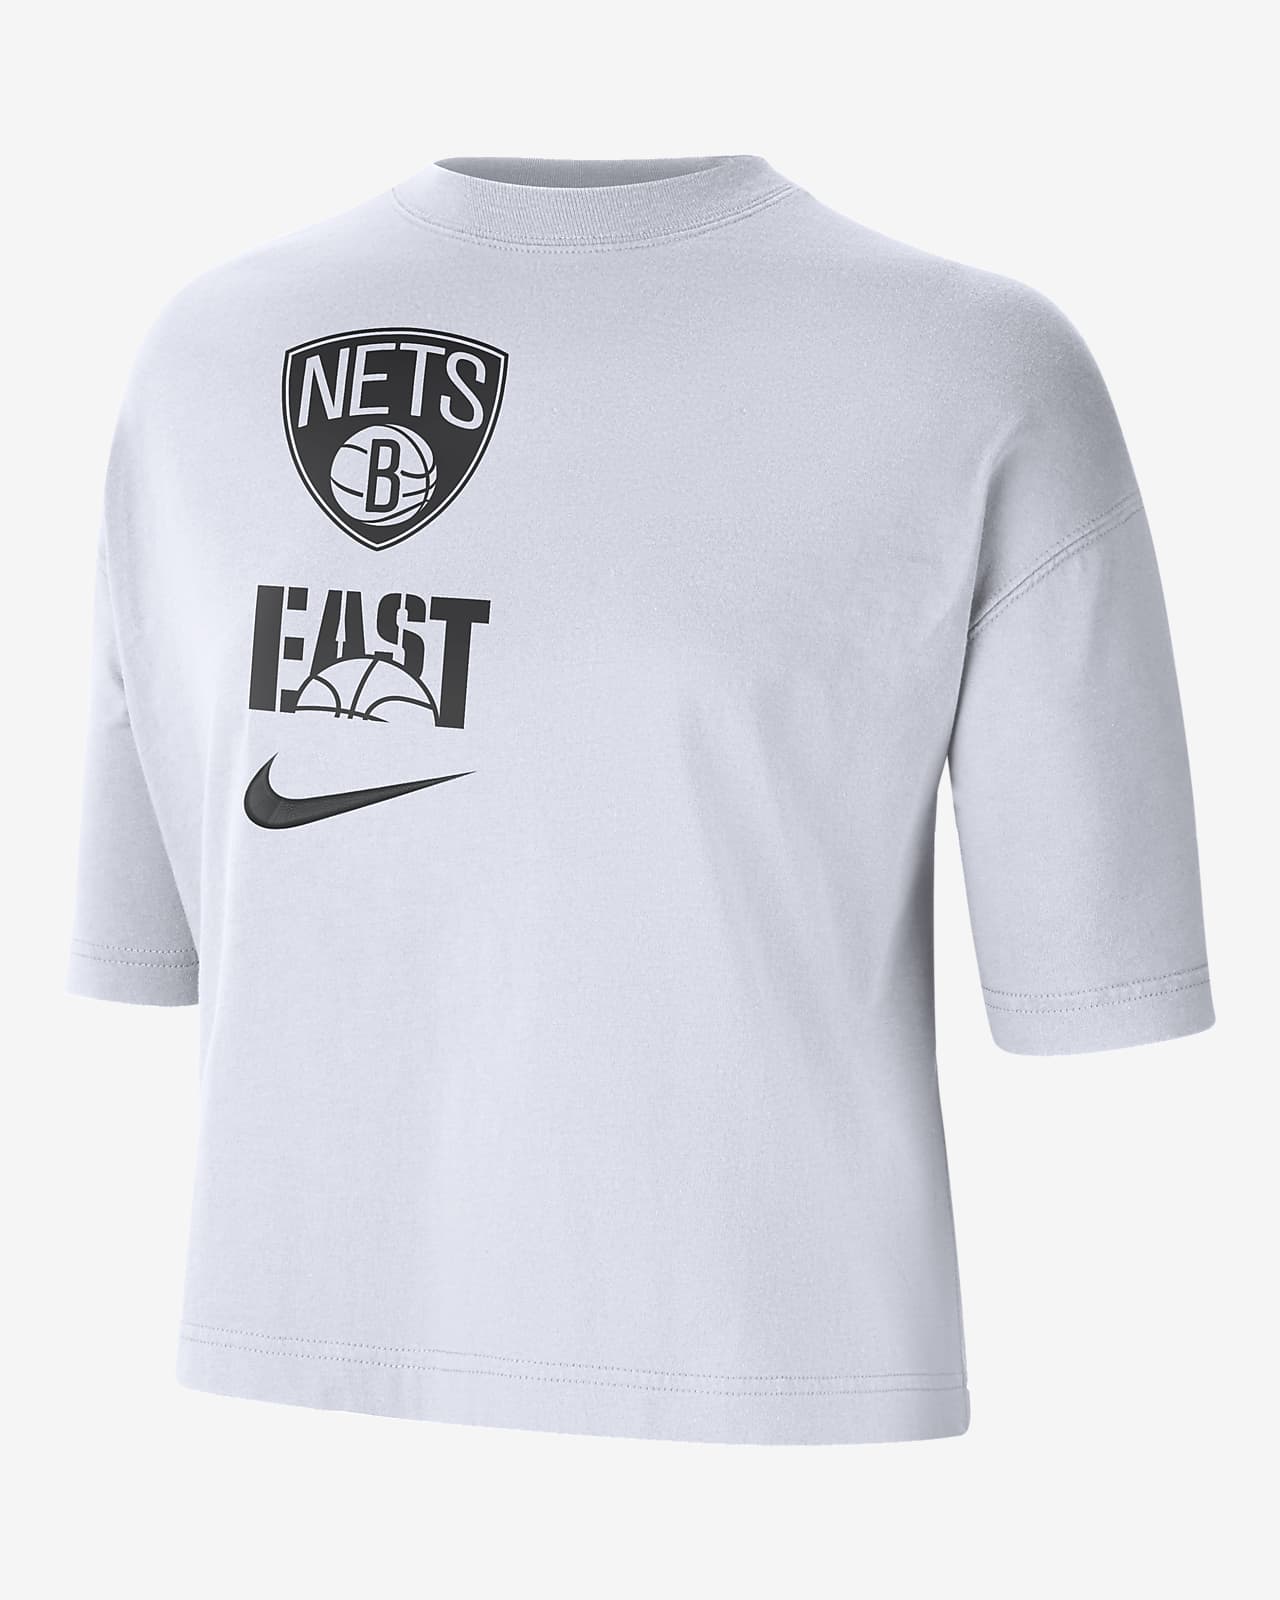 brooklyn nets training shirt